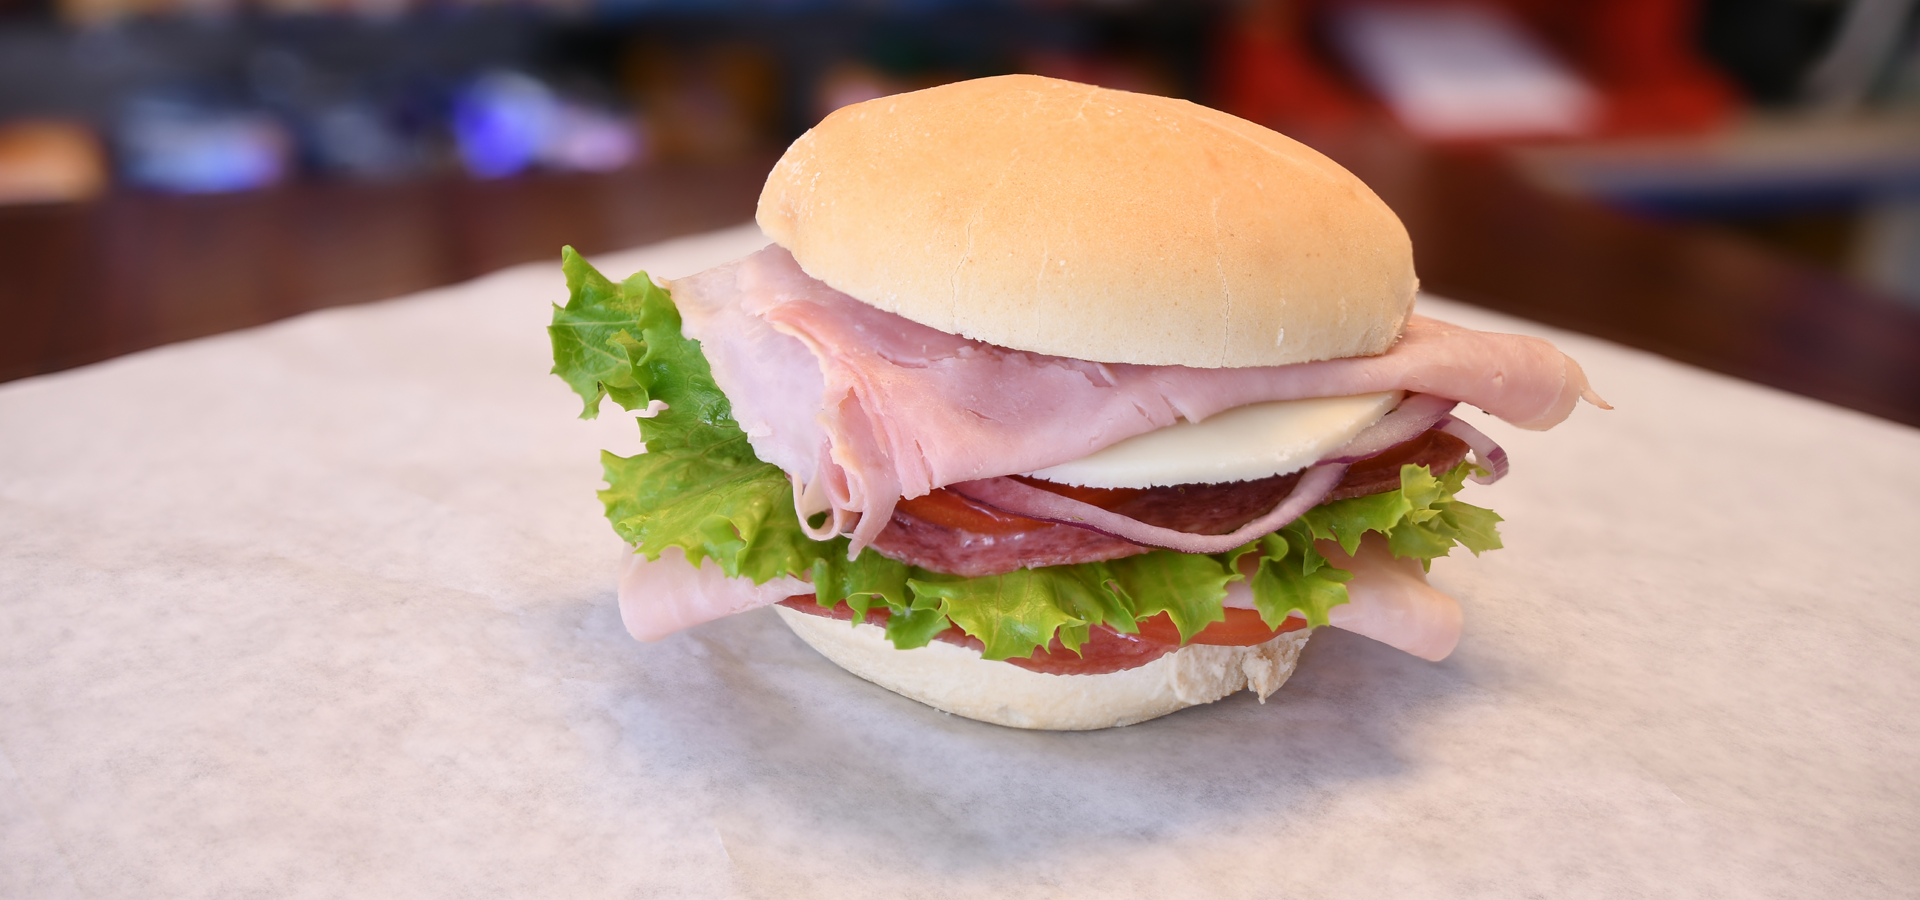 Meat cheese and veggies sandwich - Garbage sandwich